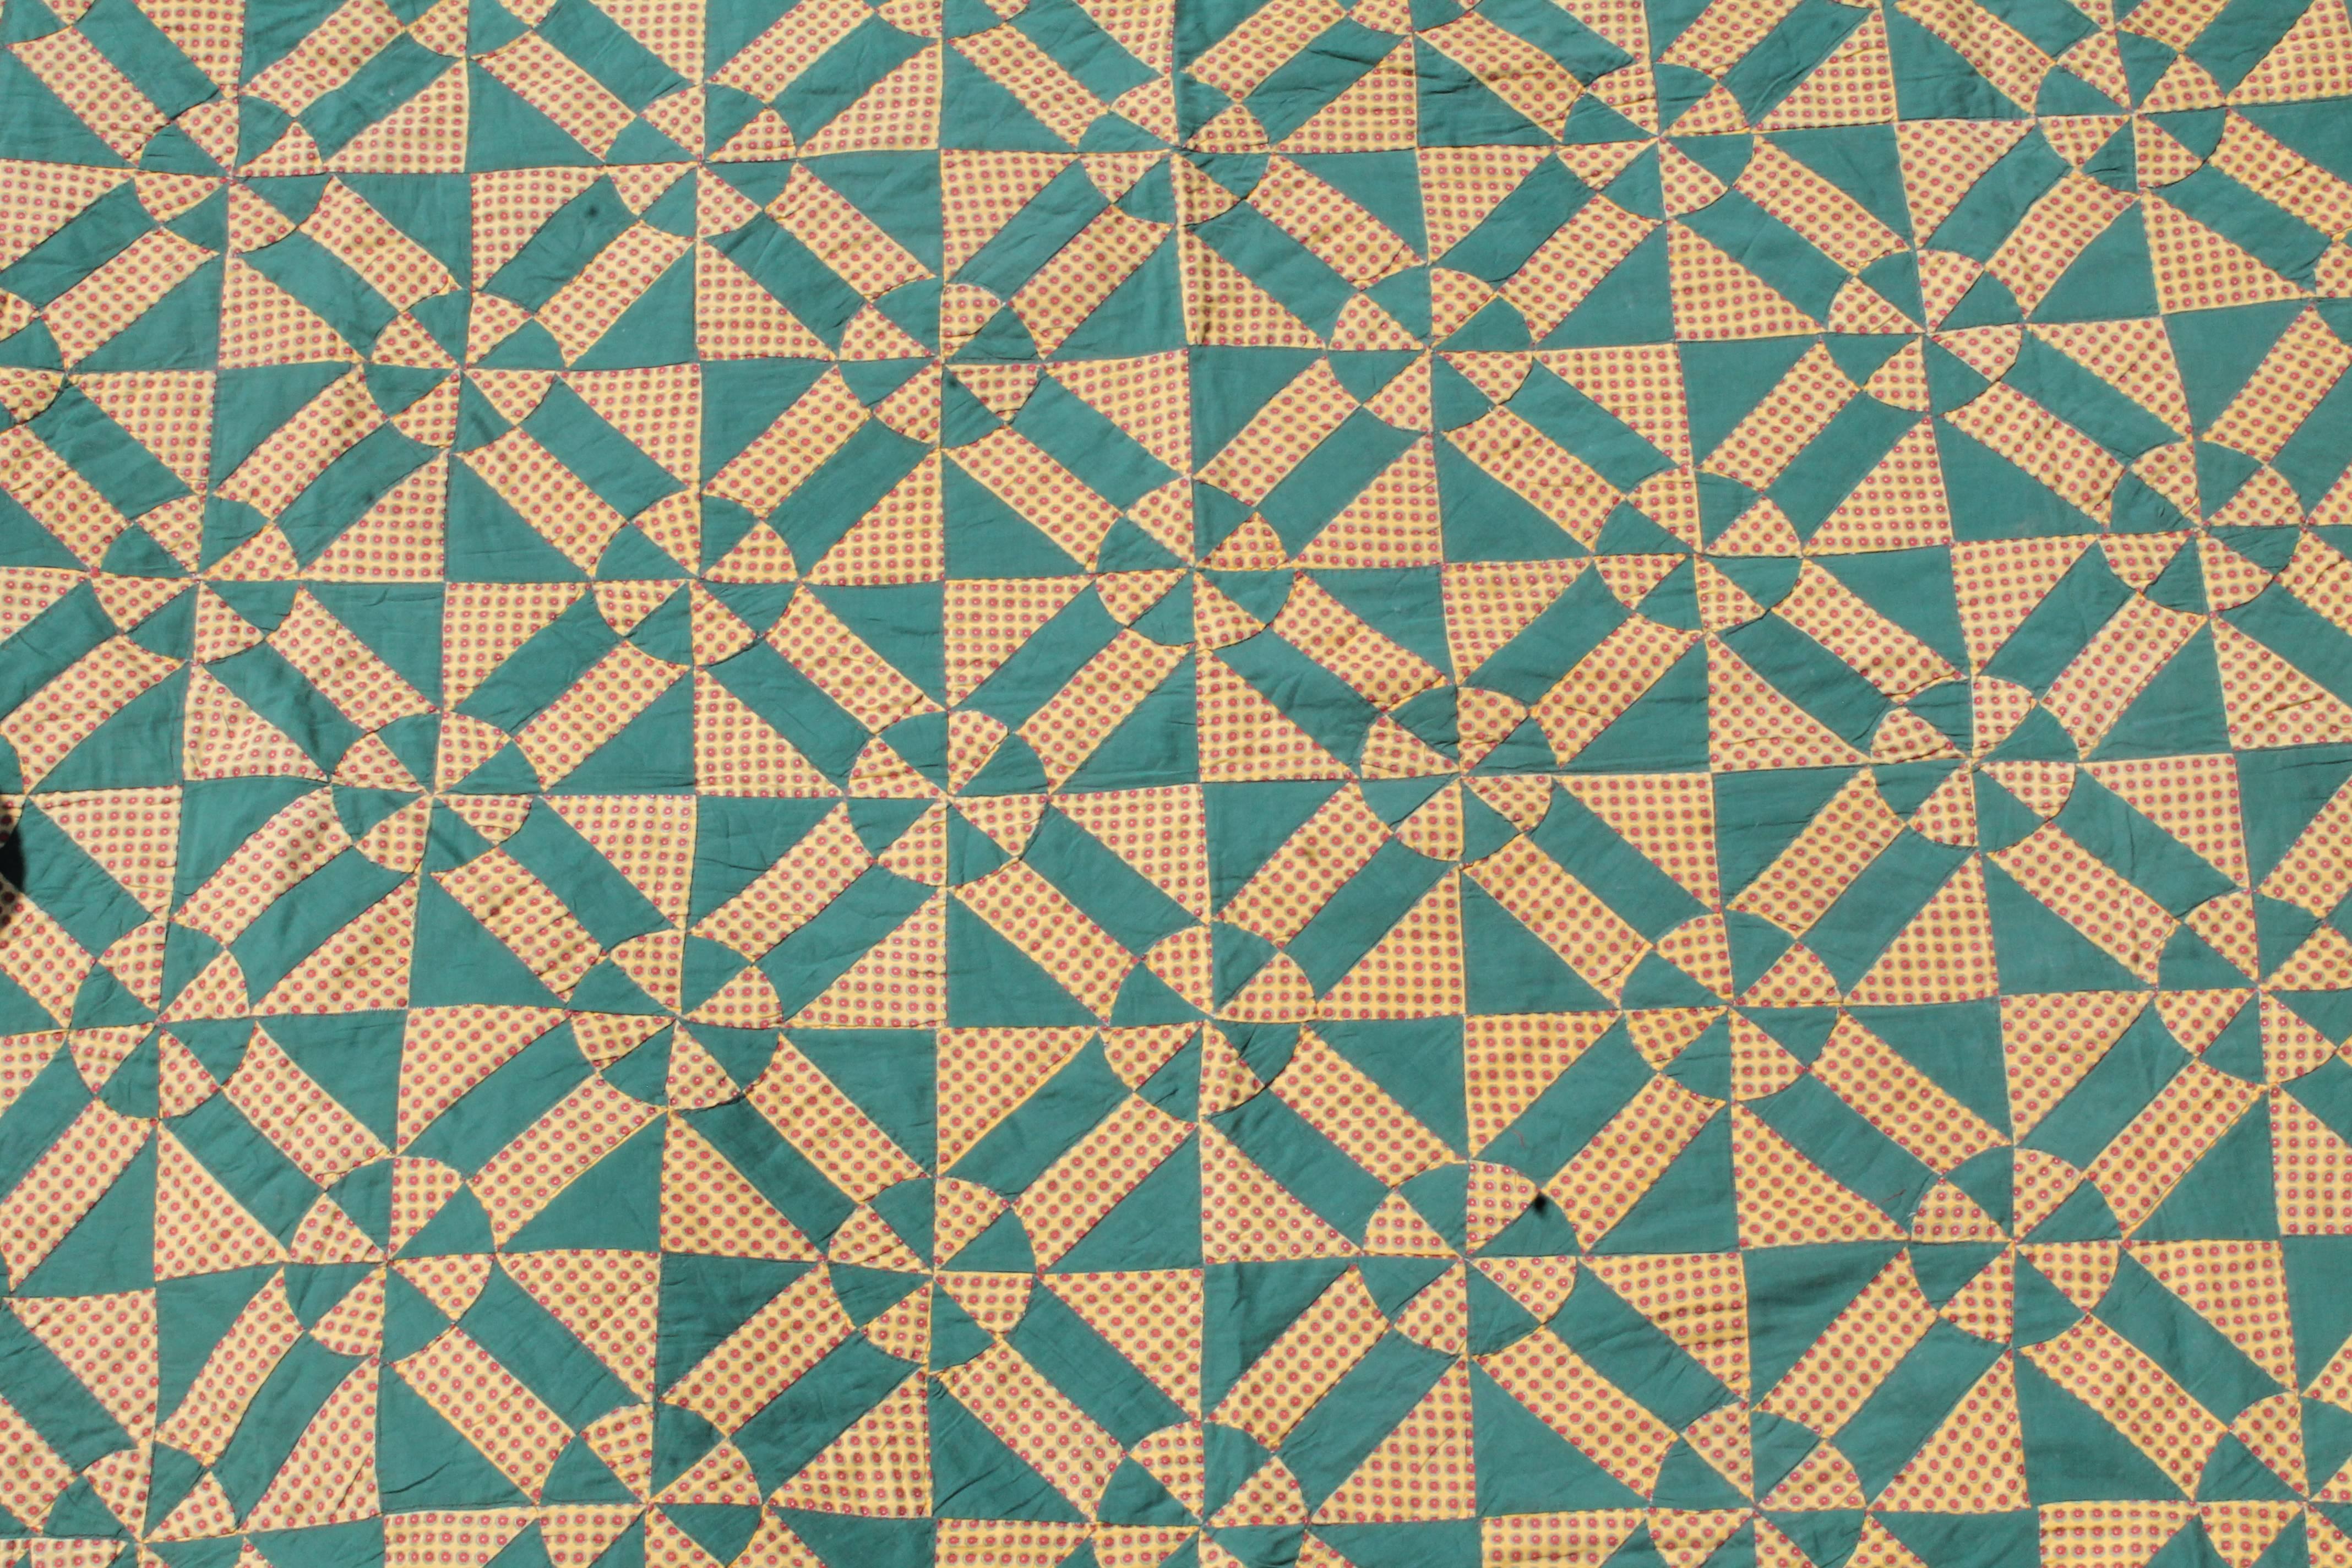 American 19th Century, Geometric Pinwheels Green and Tan Quilt